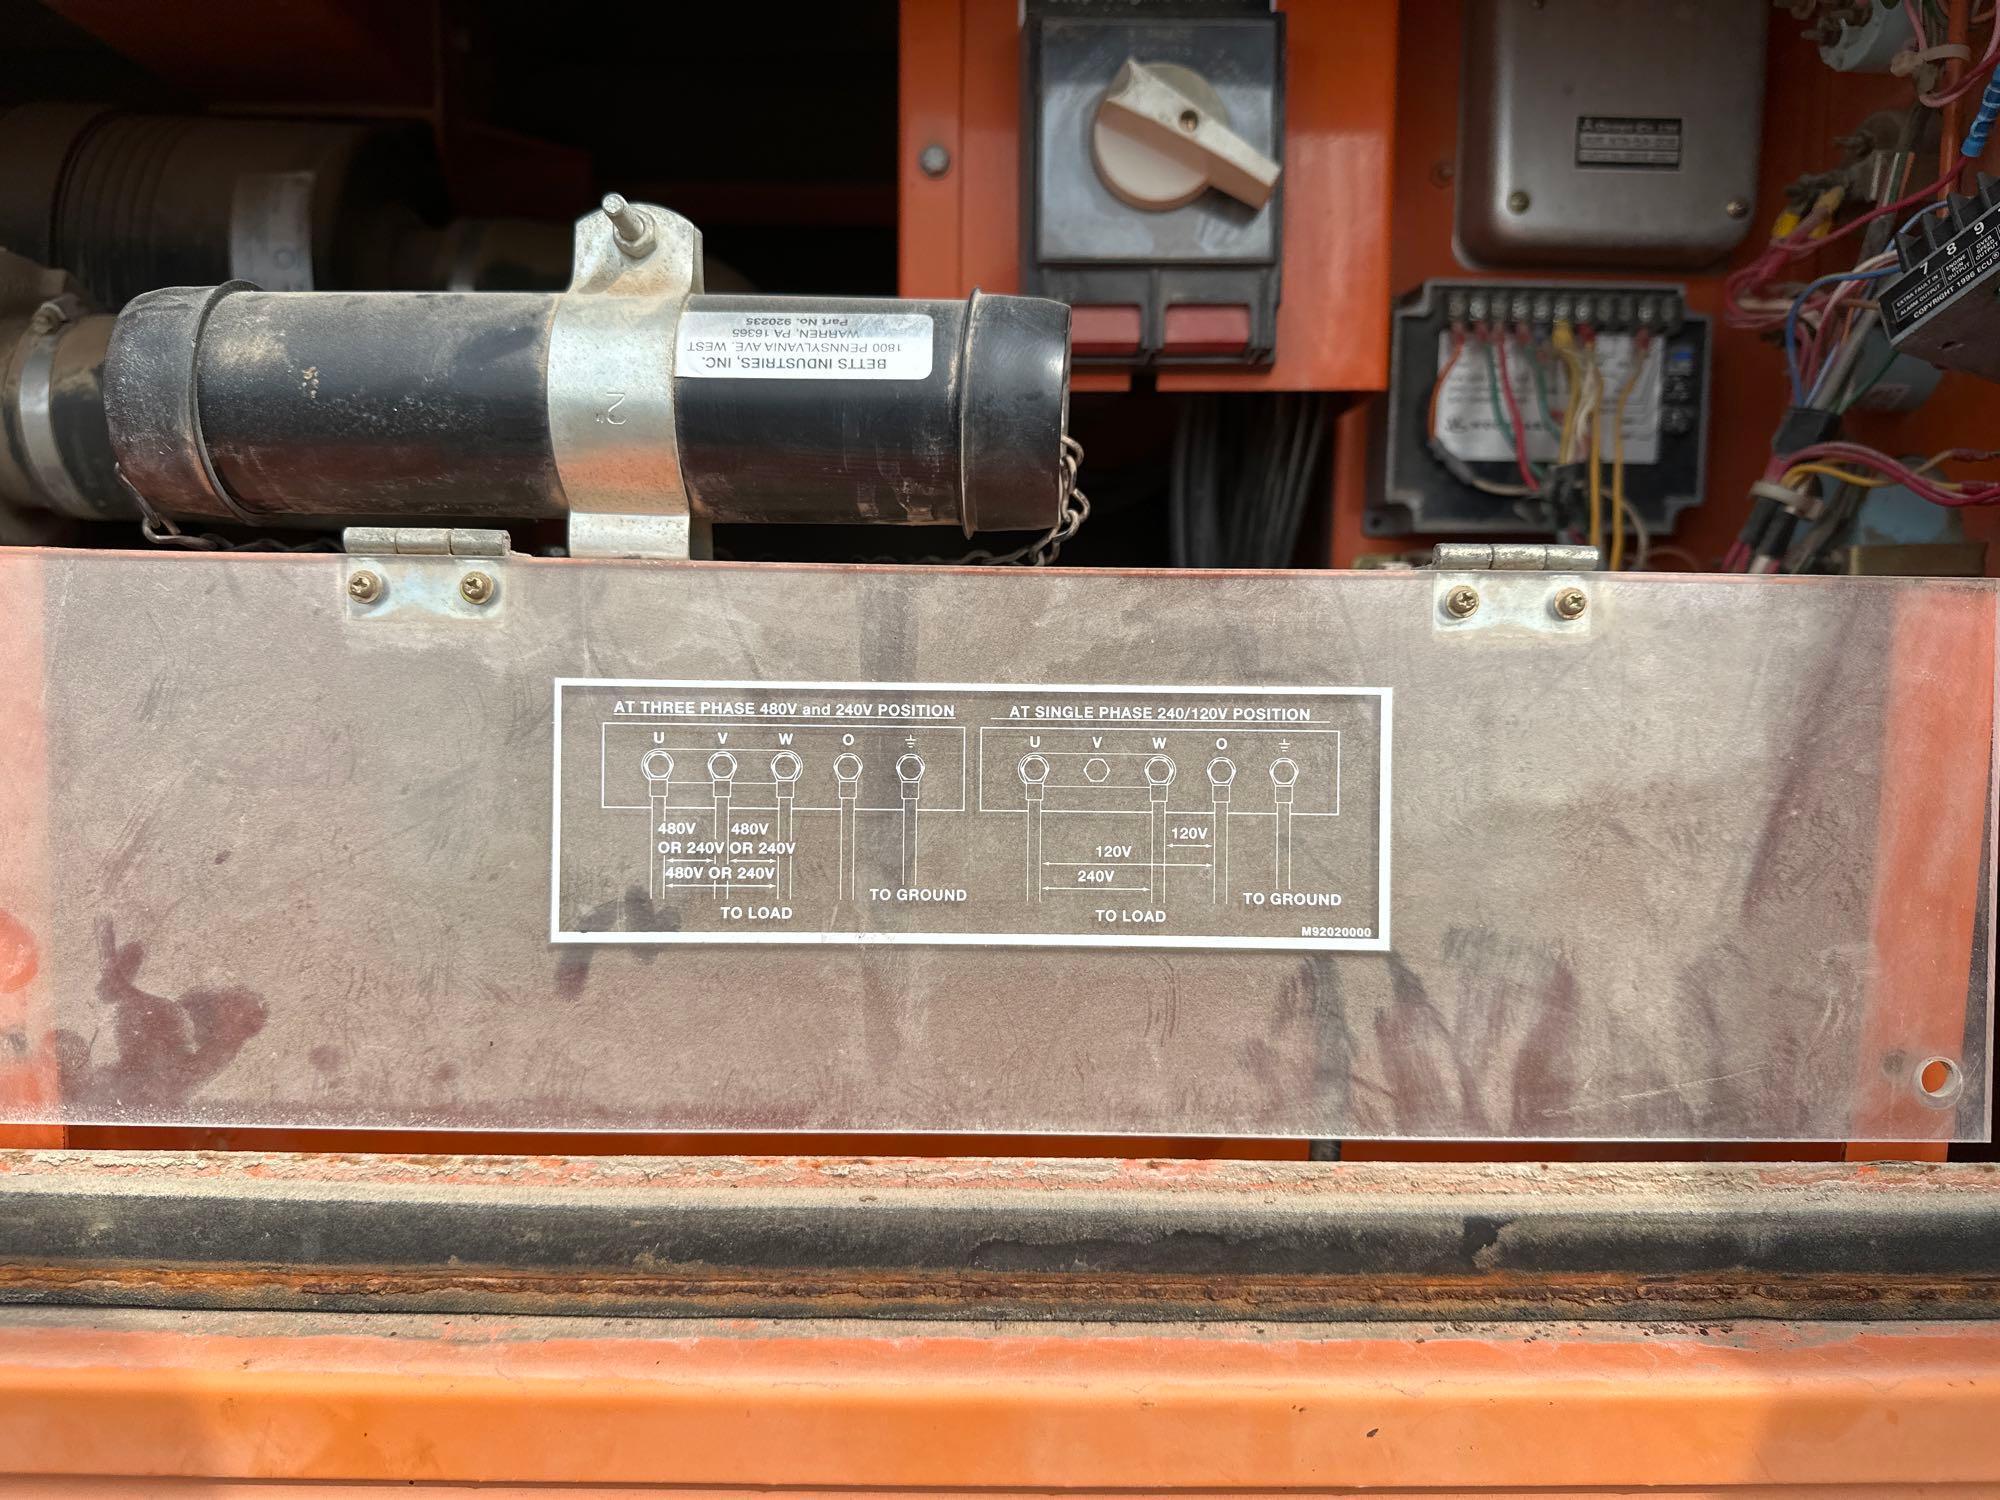 Whisperwatt DCA-70SSJU Diesel AC Generator